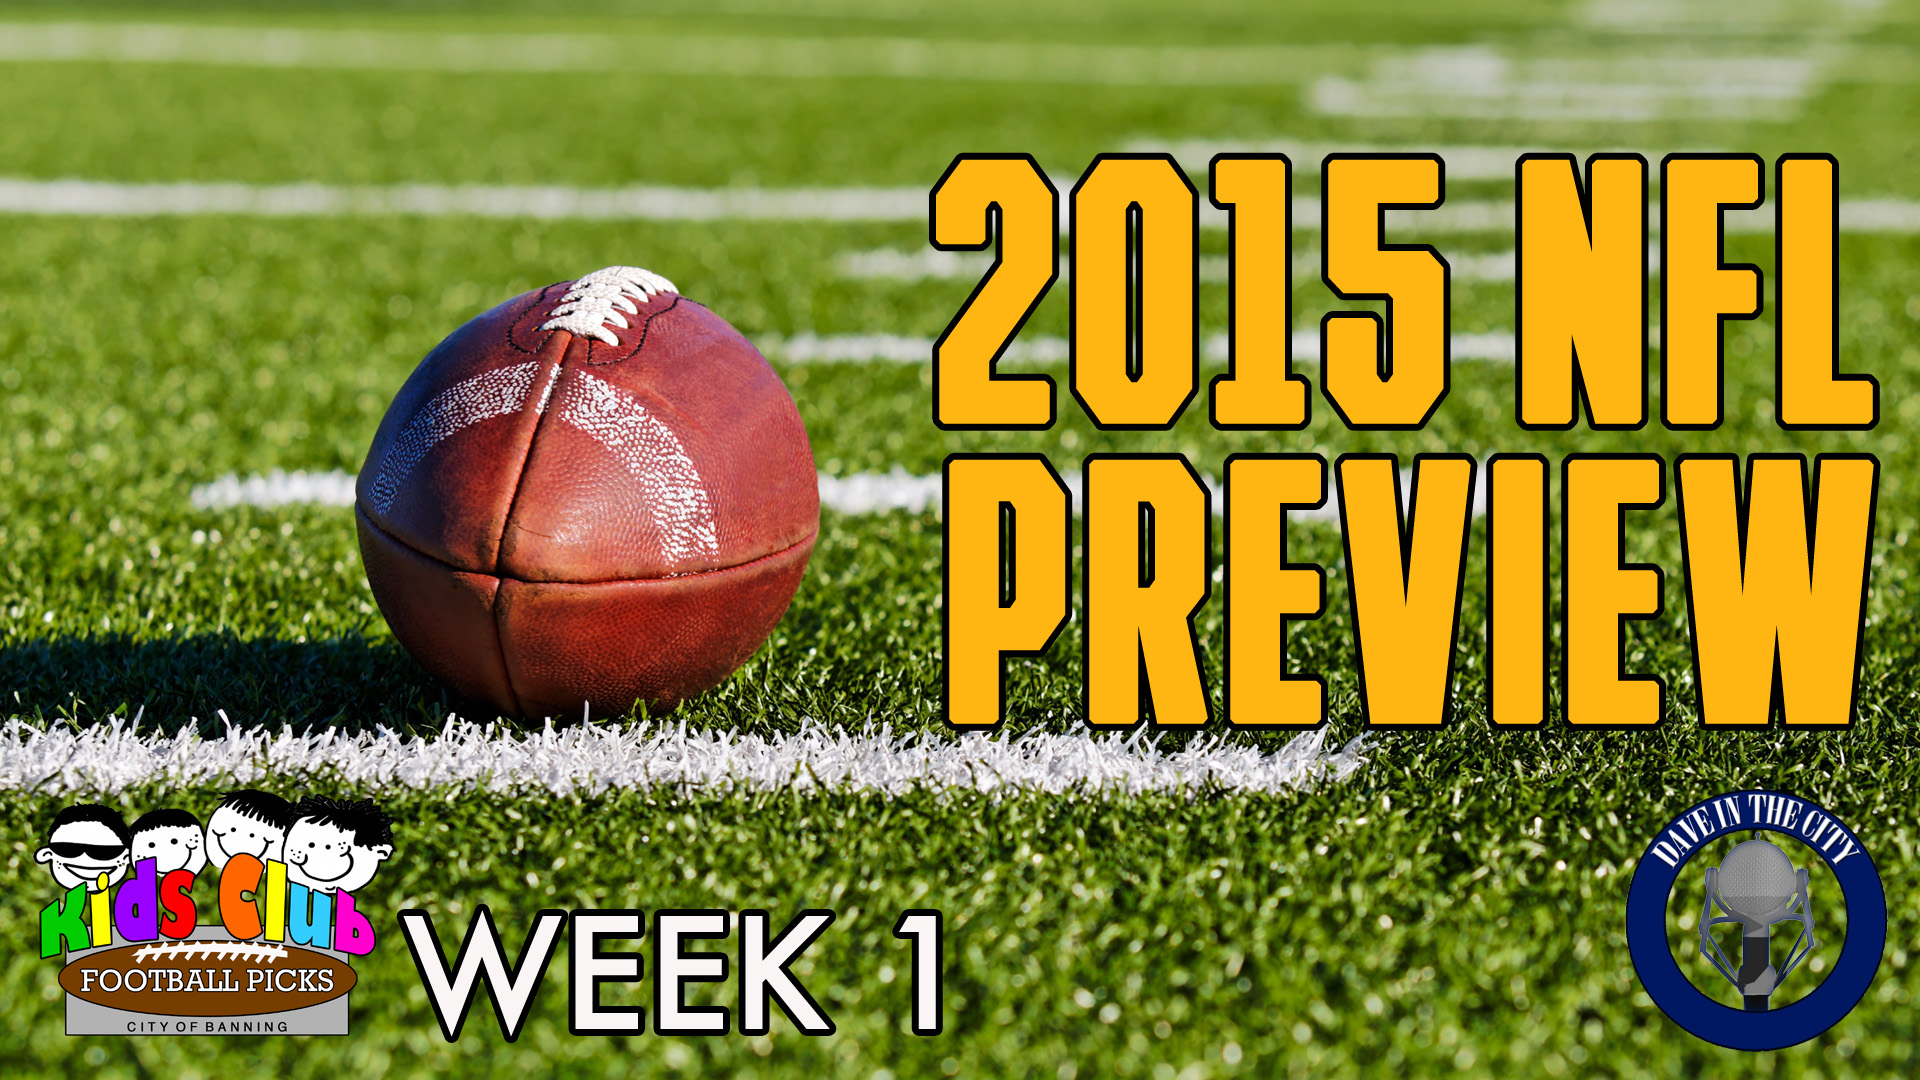 Podcast: 2015 NFL Preview, Kids Club Week 1 Picks, Billboard Top 10 Countdown (09-02-15)